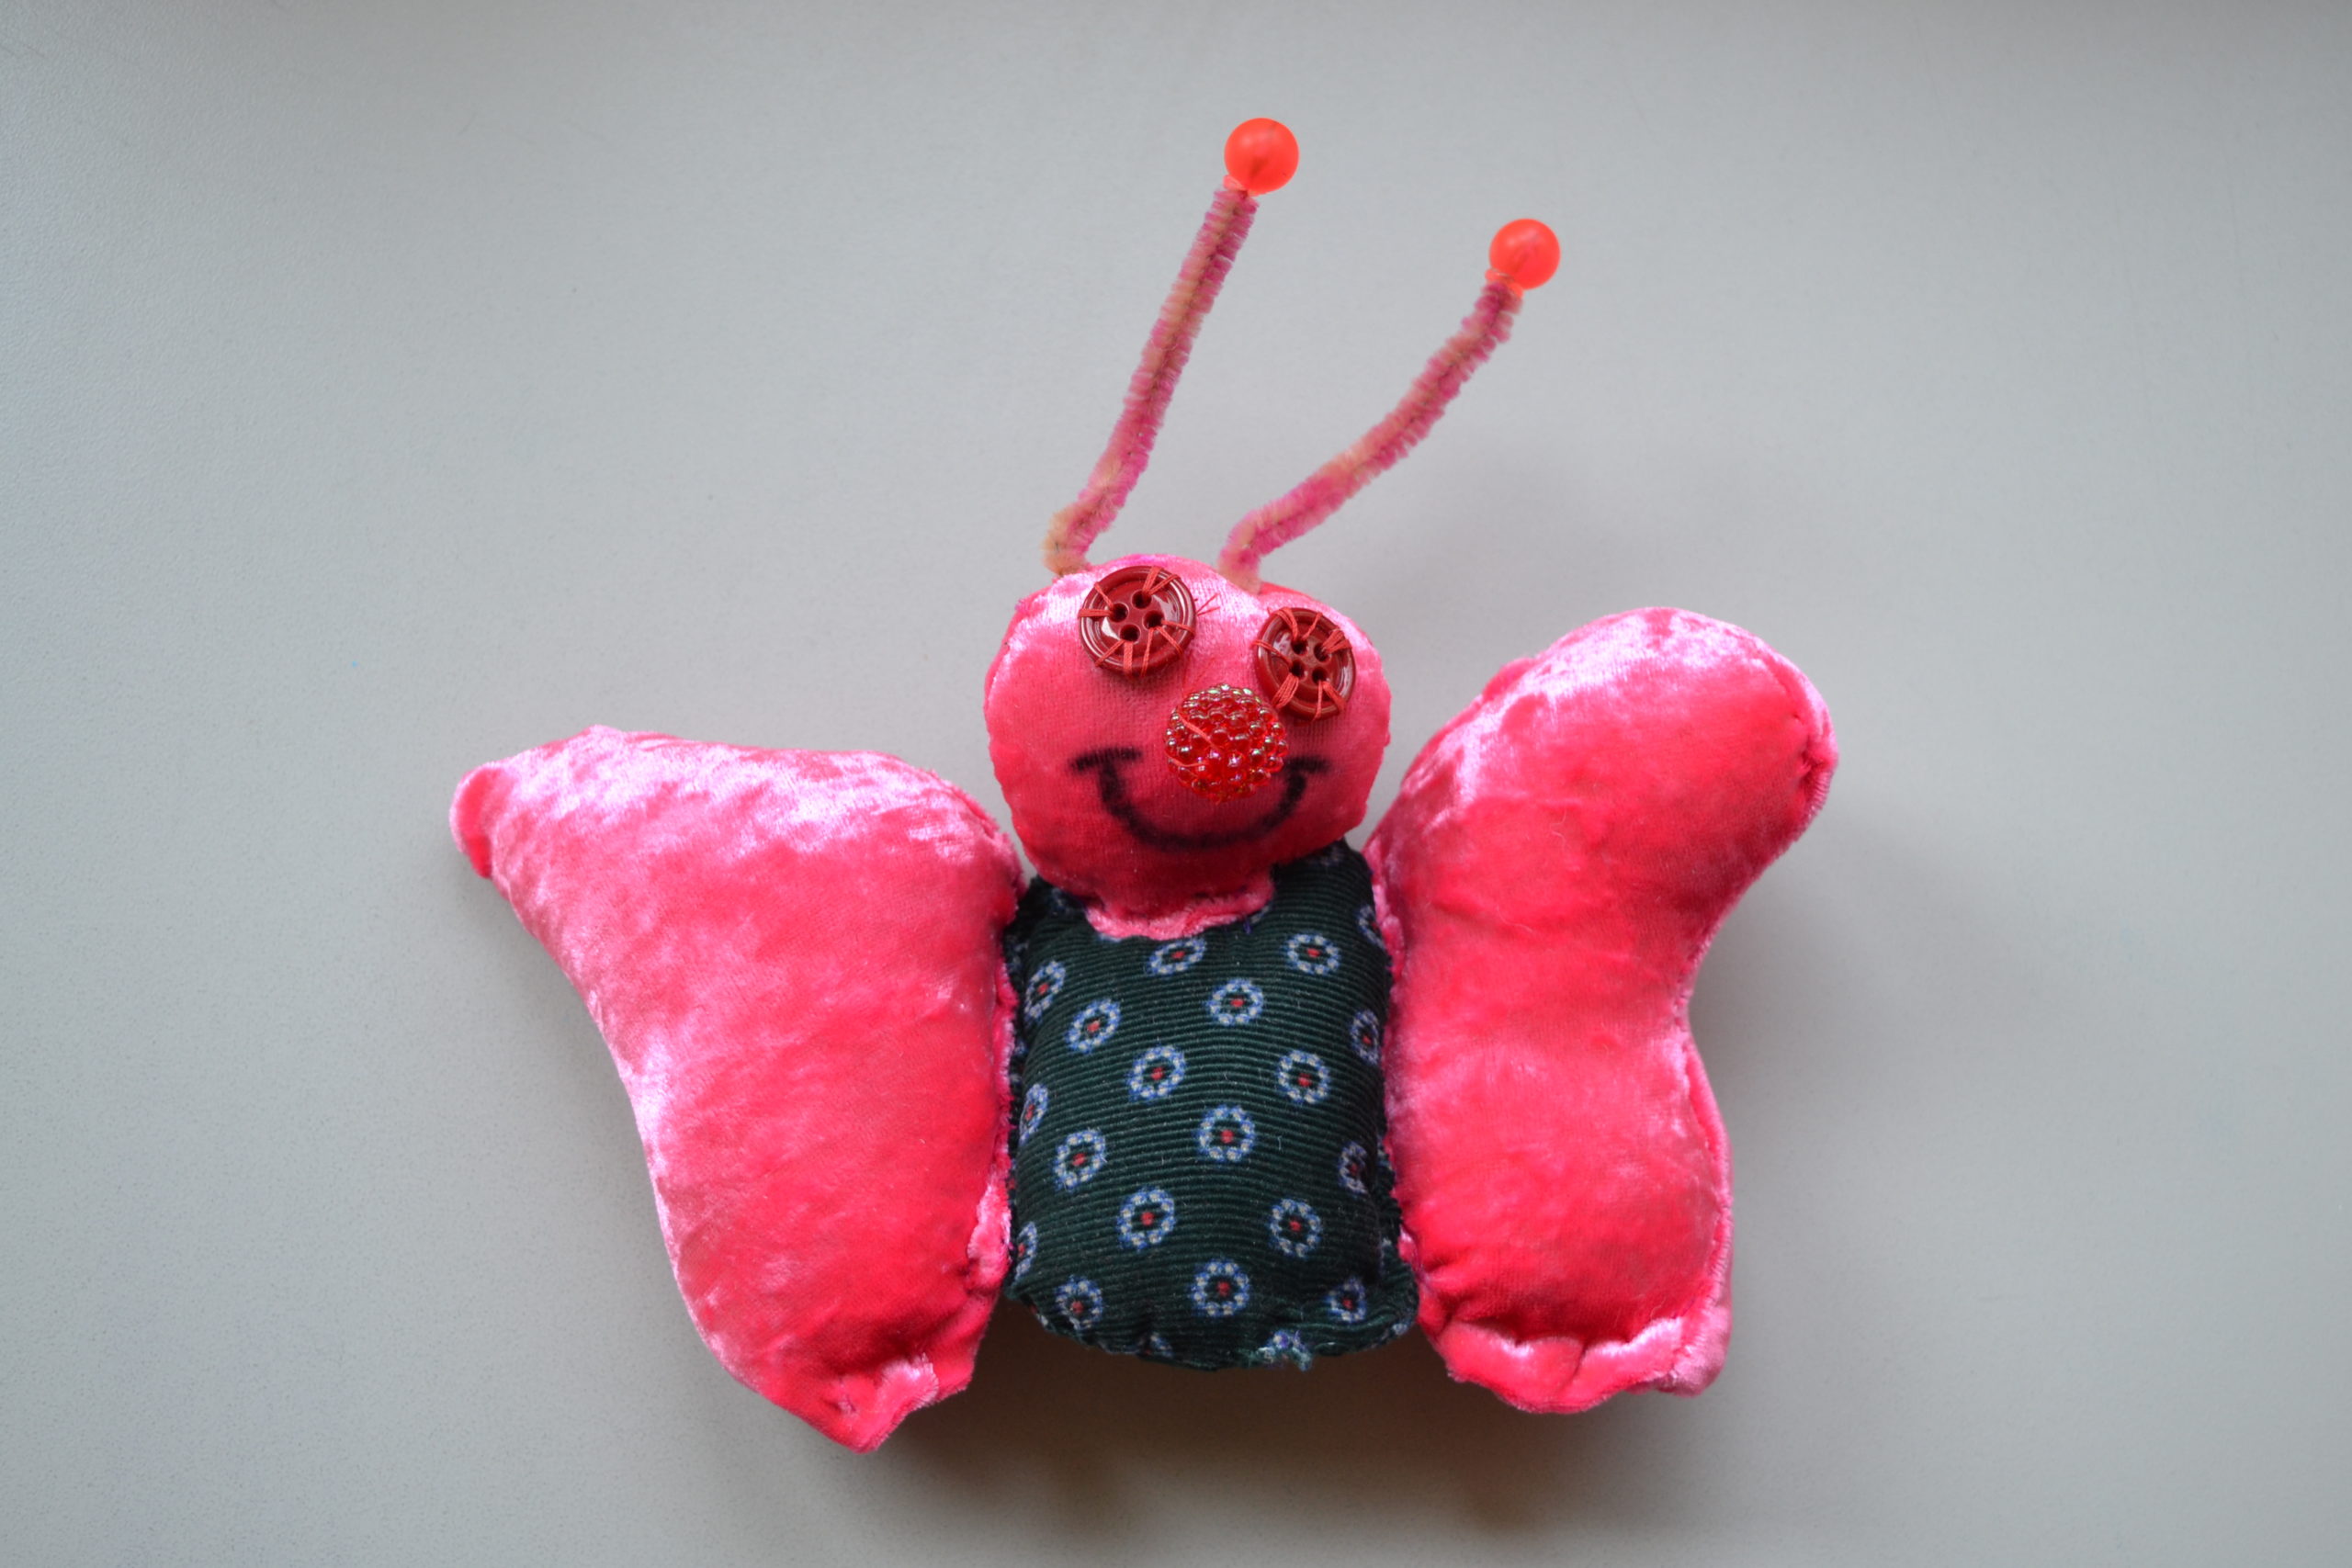 Butterfly by Sofia Bocanegra